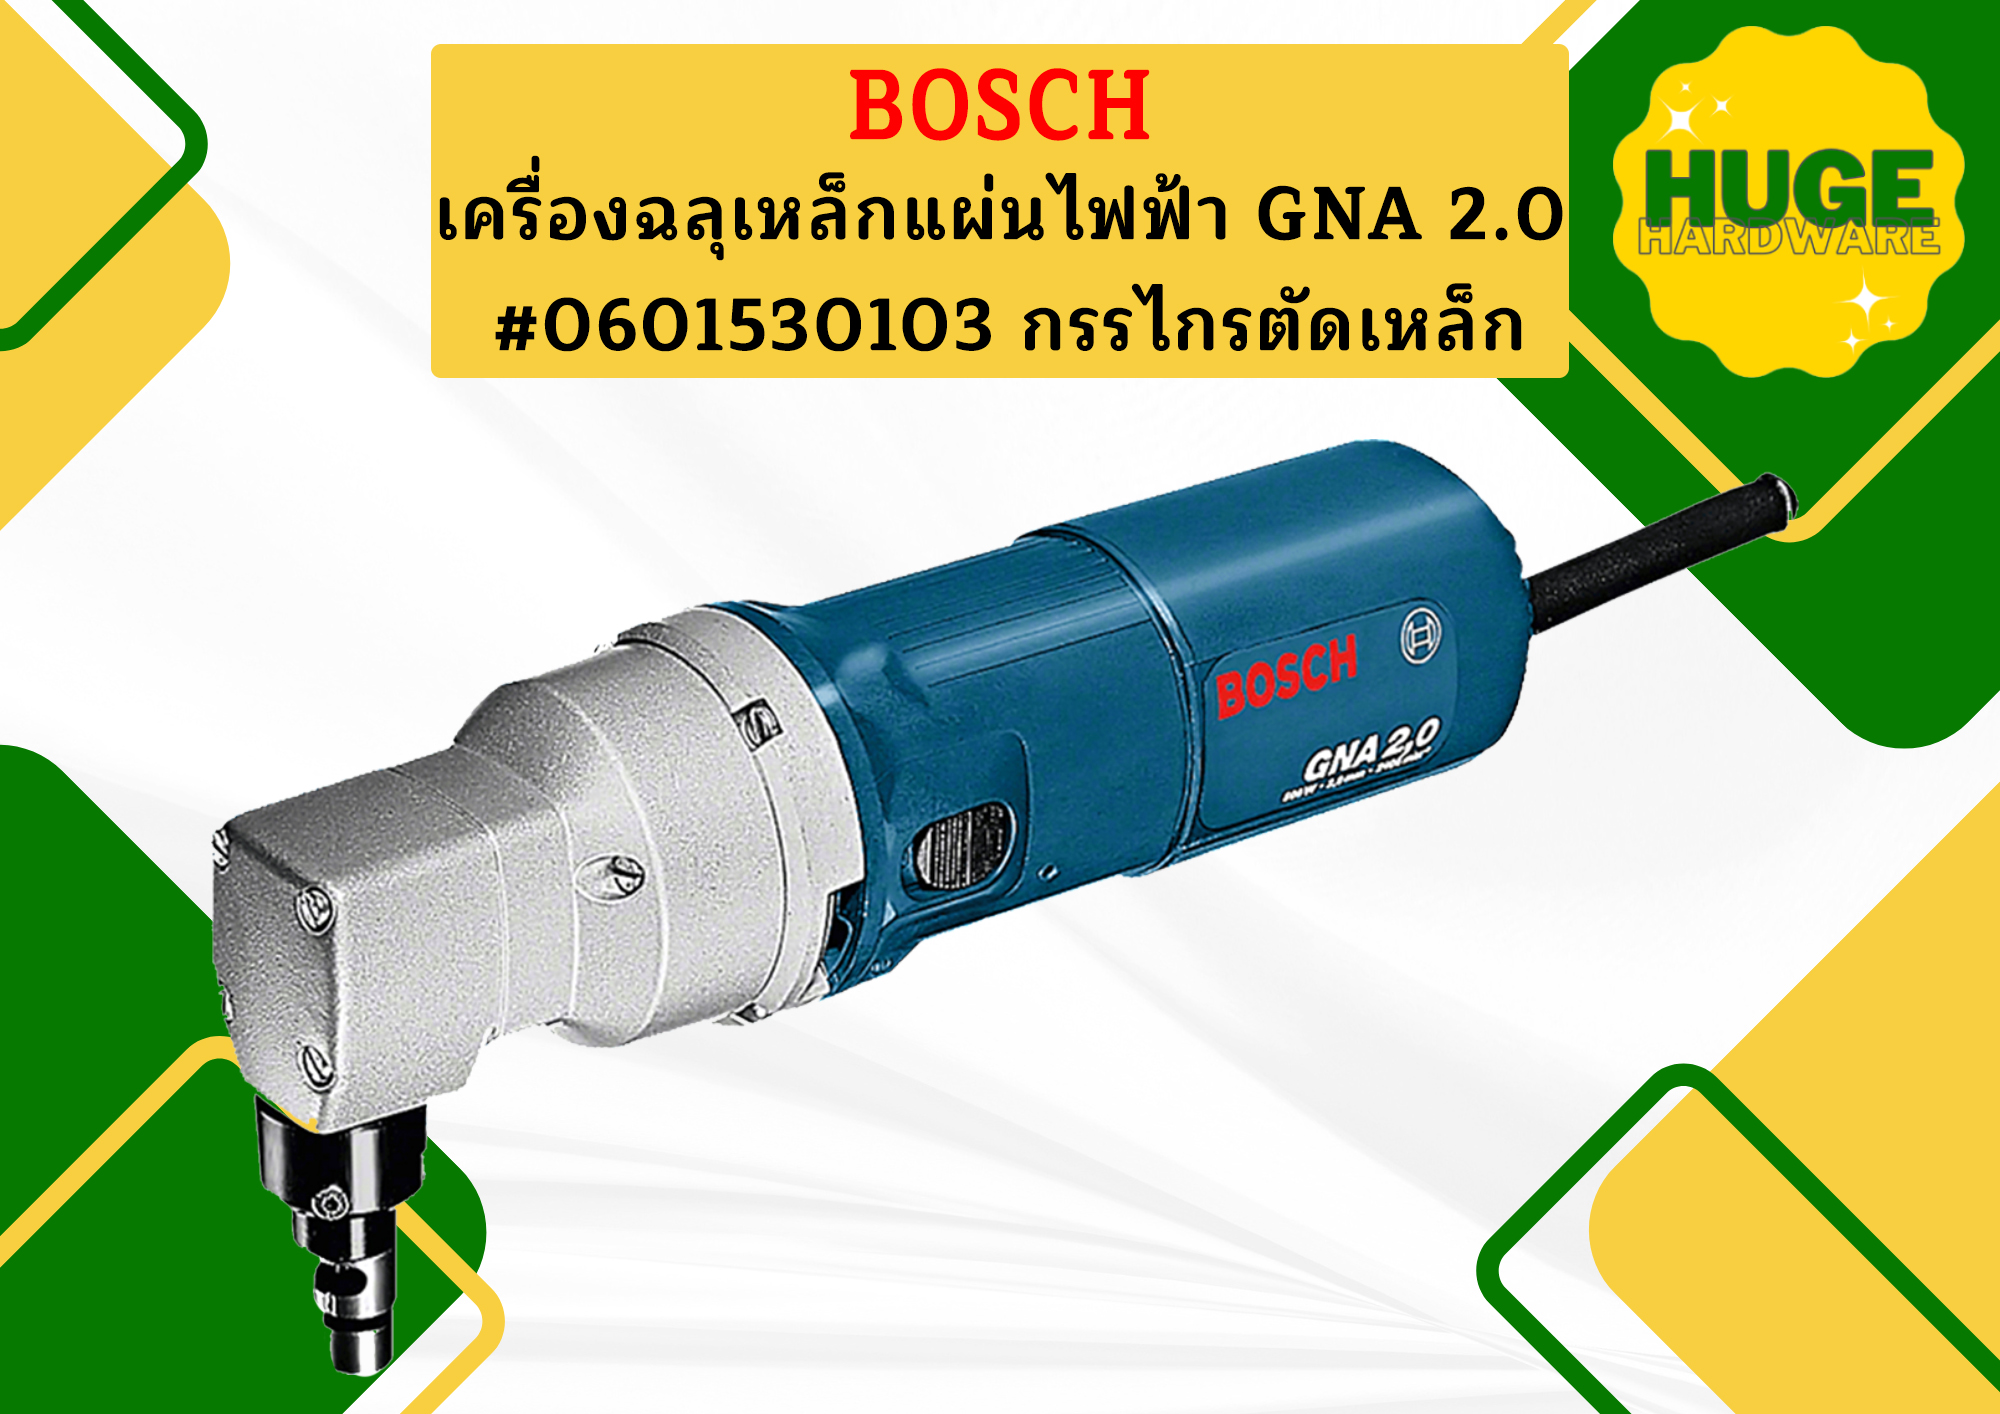 Bosch เครื่องฉลุเหล็กแผ่นไฟฟ้า GNA 2.0 ขนาดปากกัด 2.0 มม. #0601530103  กรรไกรตัดเหล็ก